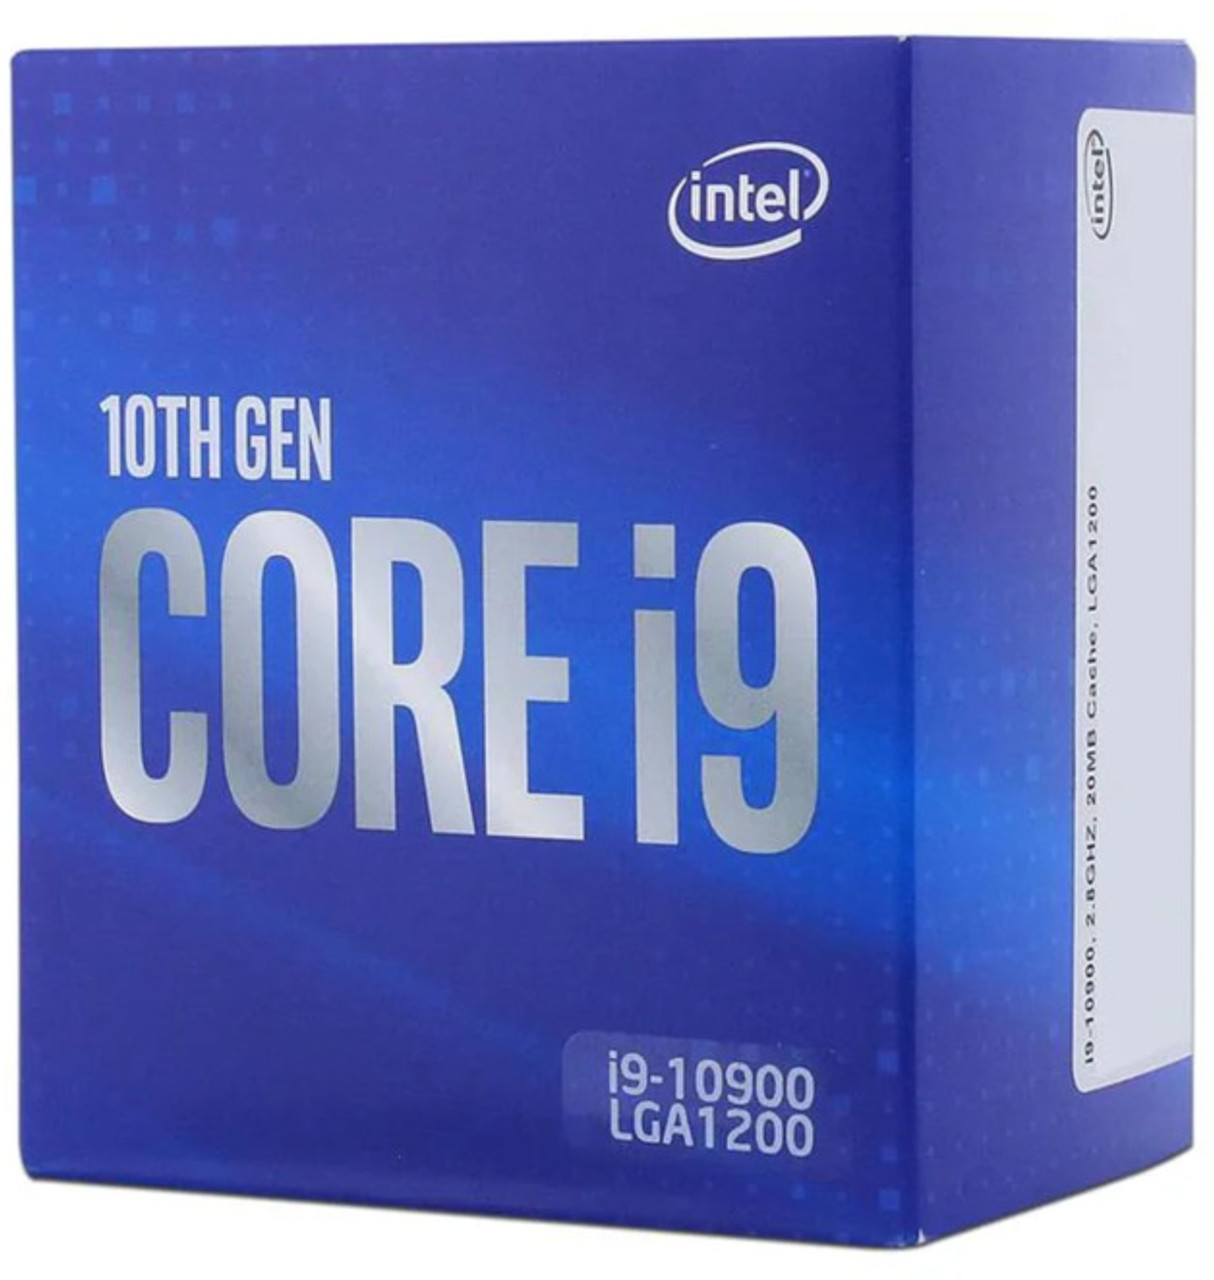 Intel Core i9-10900K Processor (20M Cache, up to 5.30 GHz) FC-LGA14A, Tray